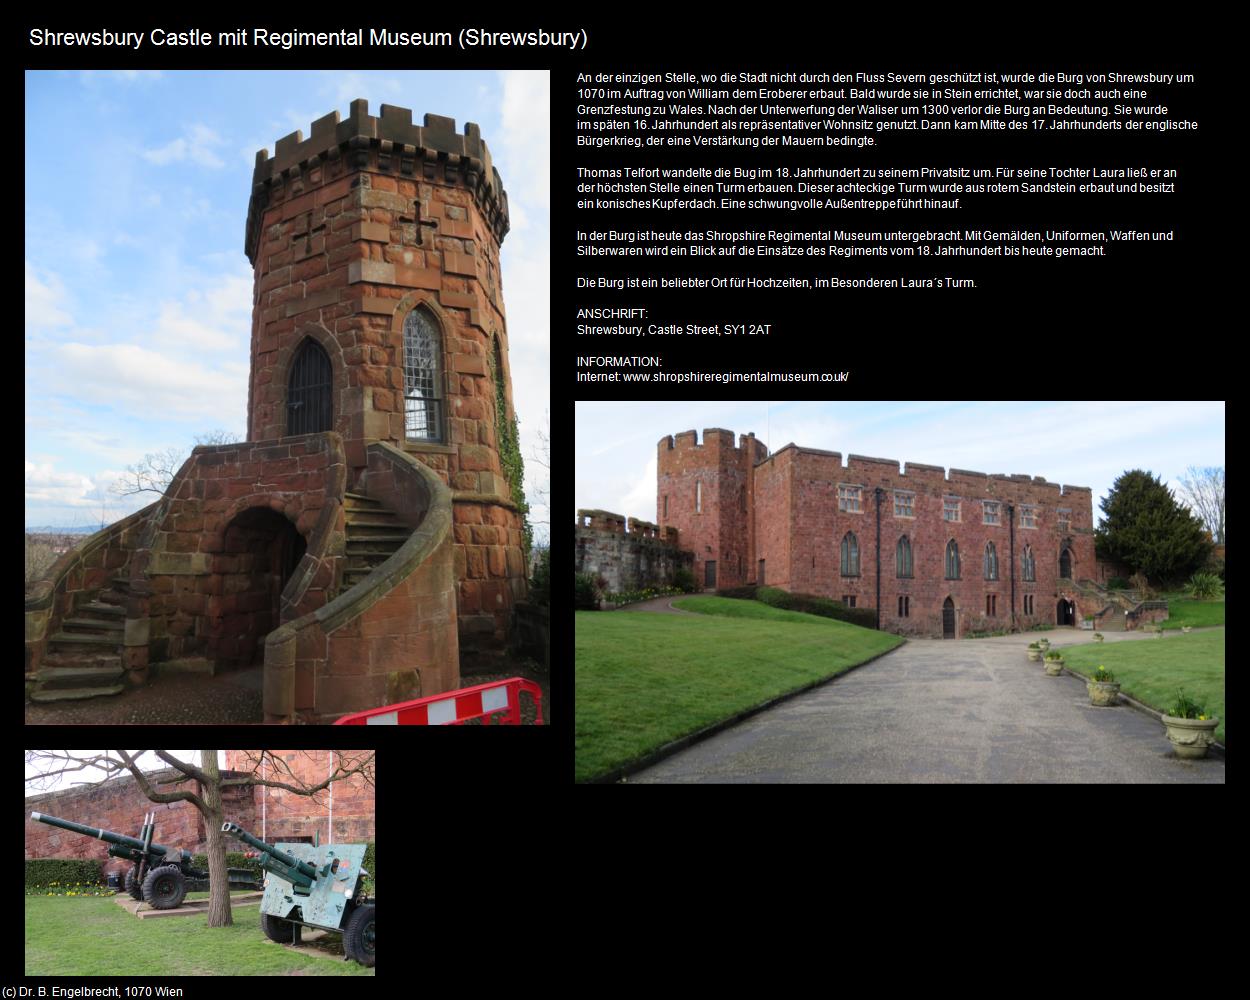 Shrewsbury Castle mit Regimental Museum  (Shrewsbury, England) in Kulturatlas-ENGLAND und WALES